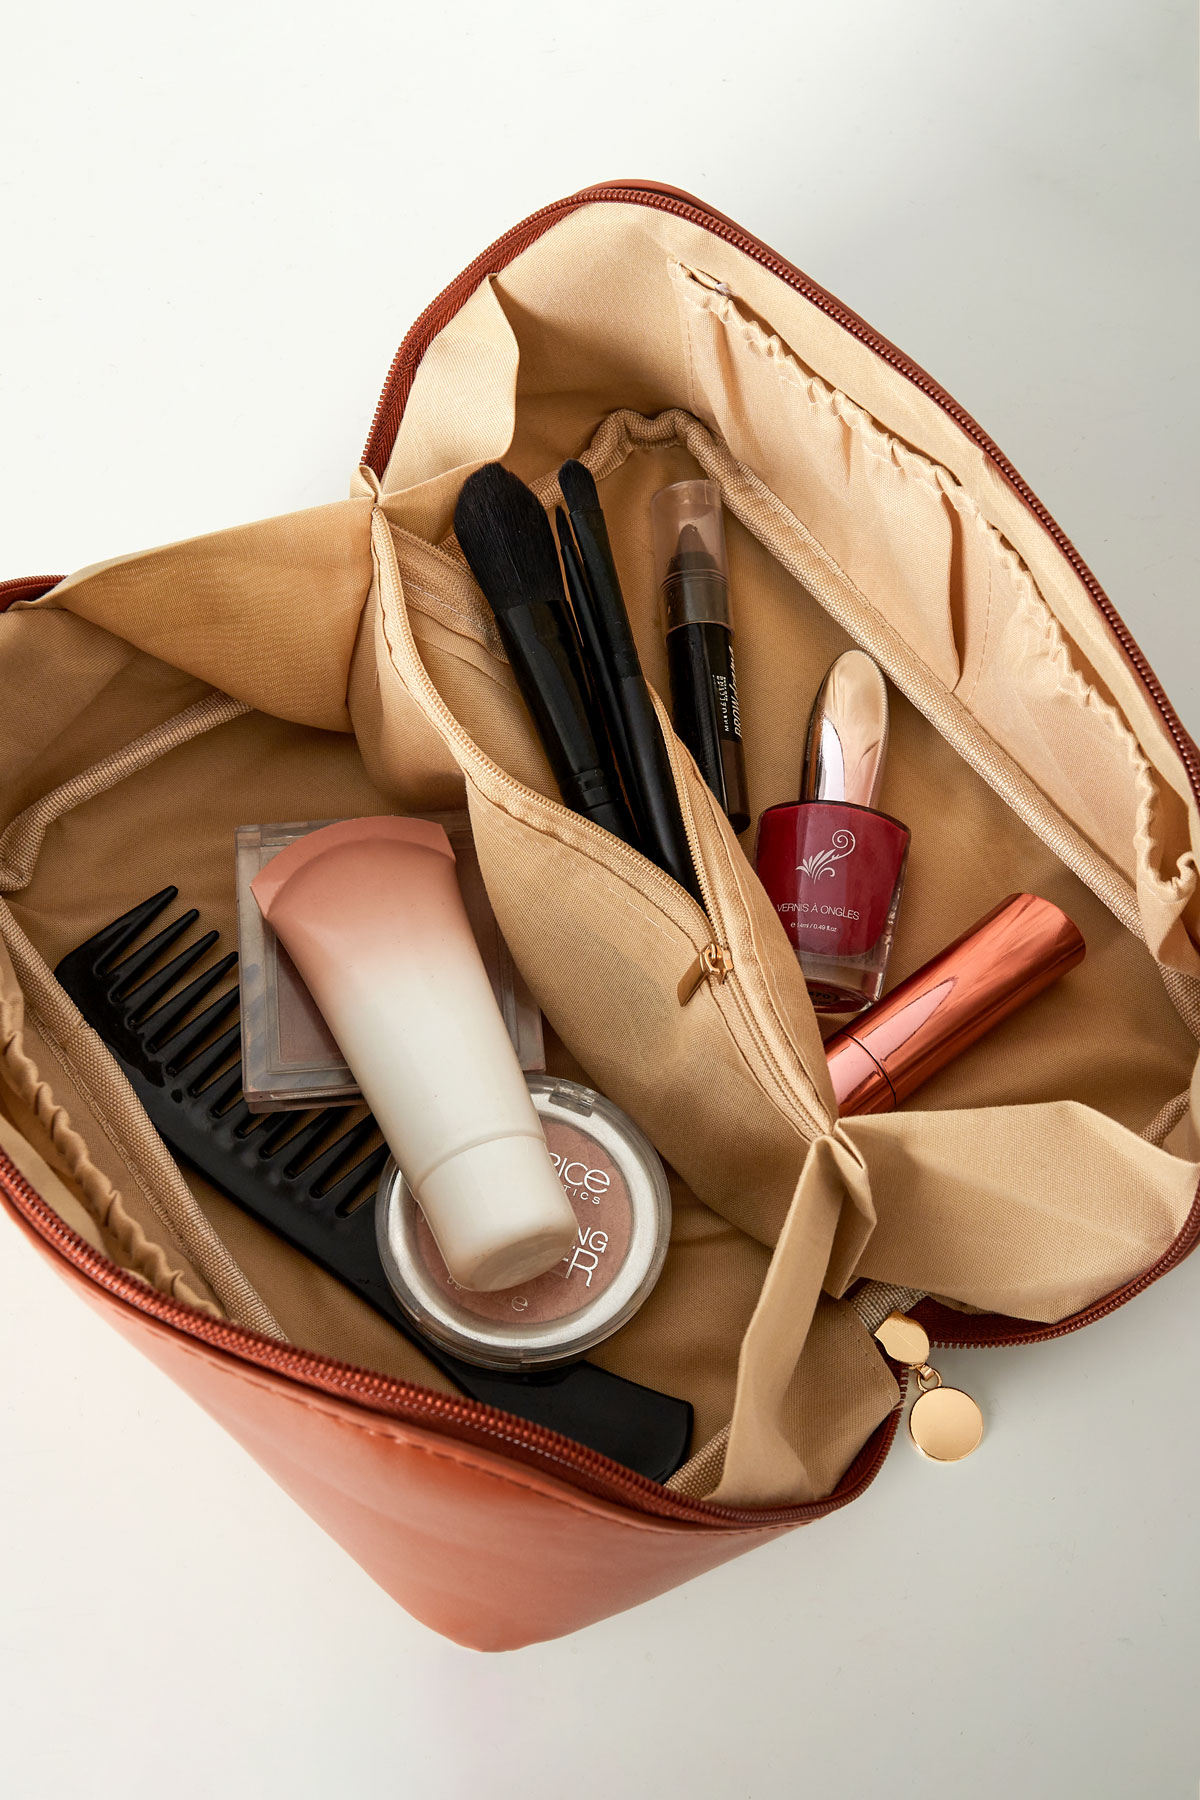 Basic make-up bag - white Picture2